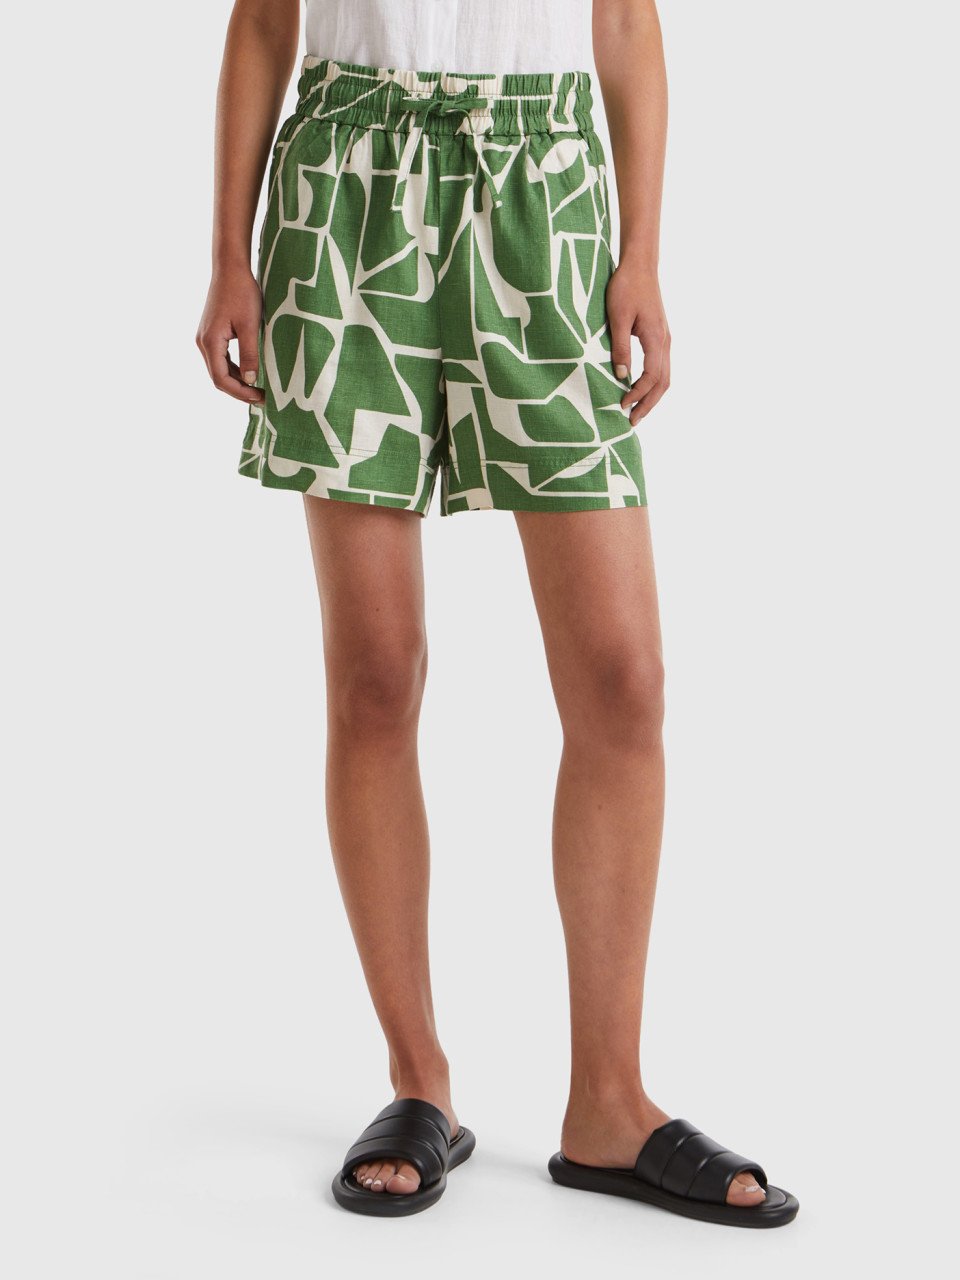 Benetton, Printed Linen Shorts, Military Green, Women